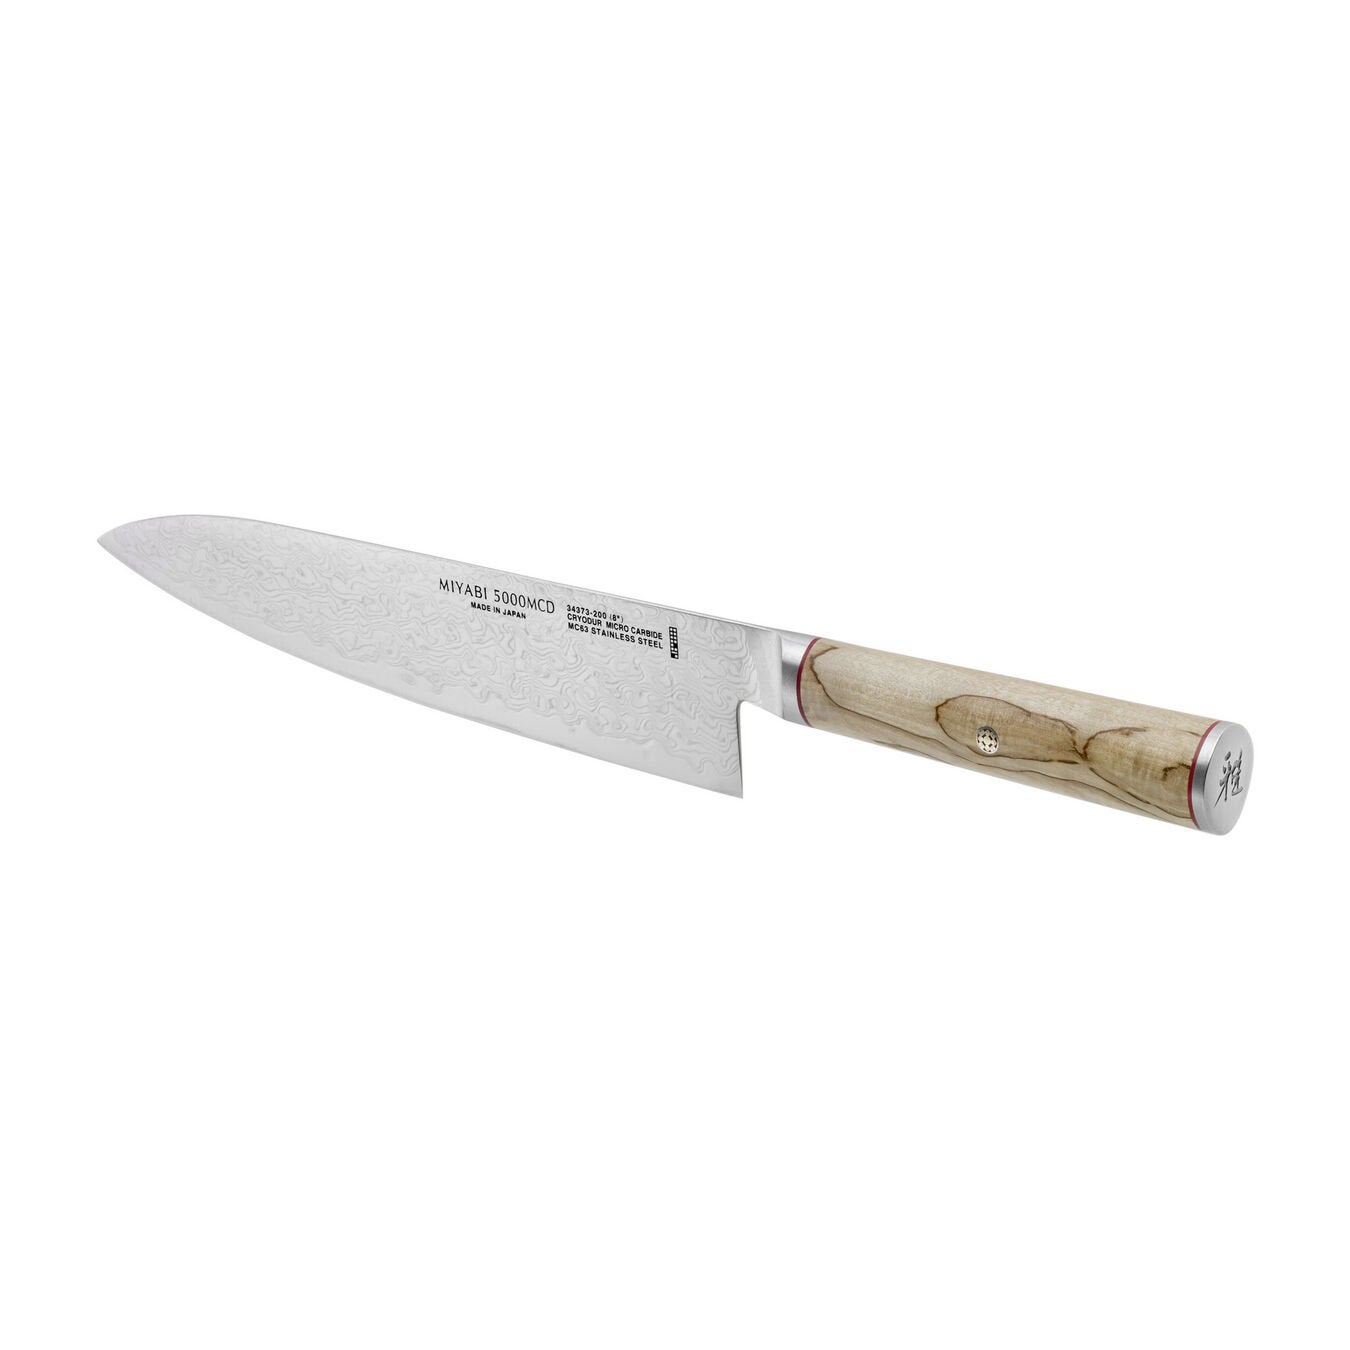 Miyabi Birch 5000MCD Gyutoh chef's knife - Buy Knives and Knife